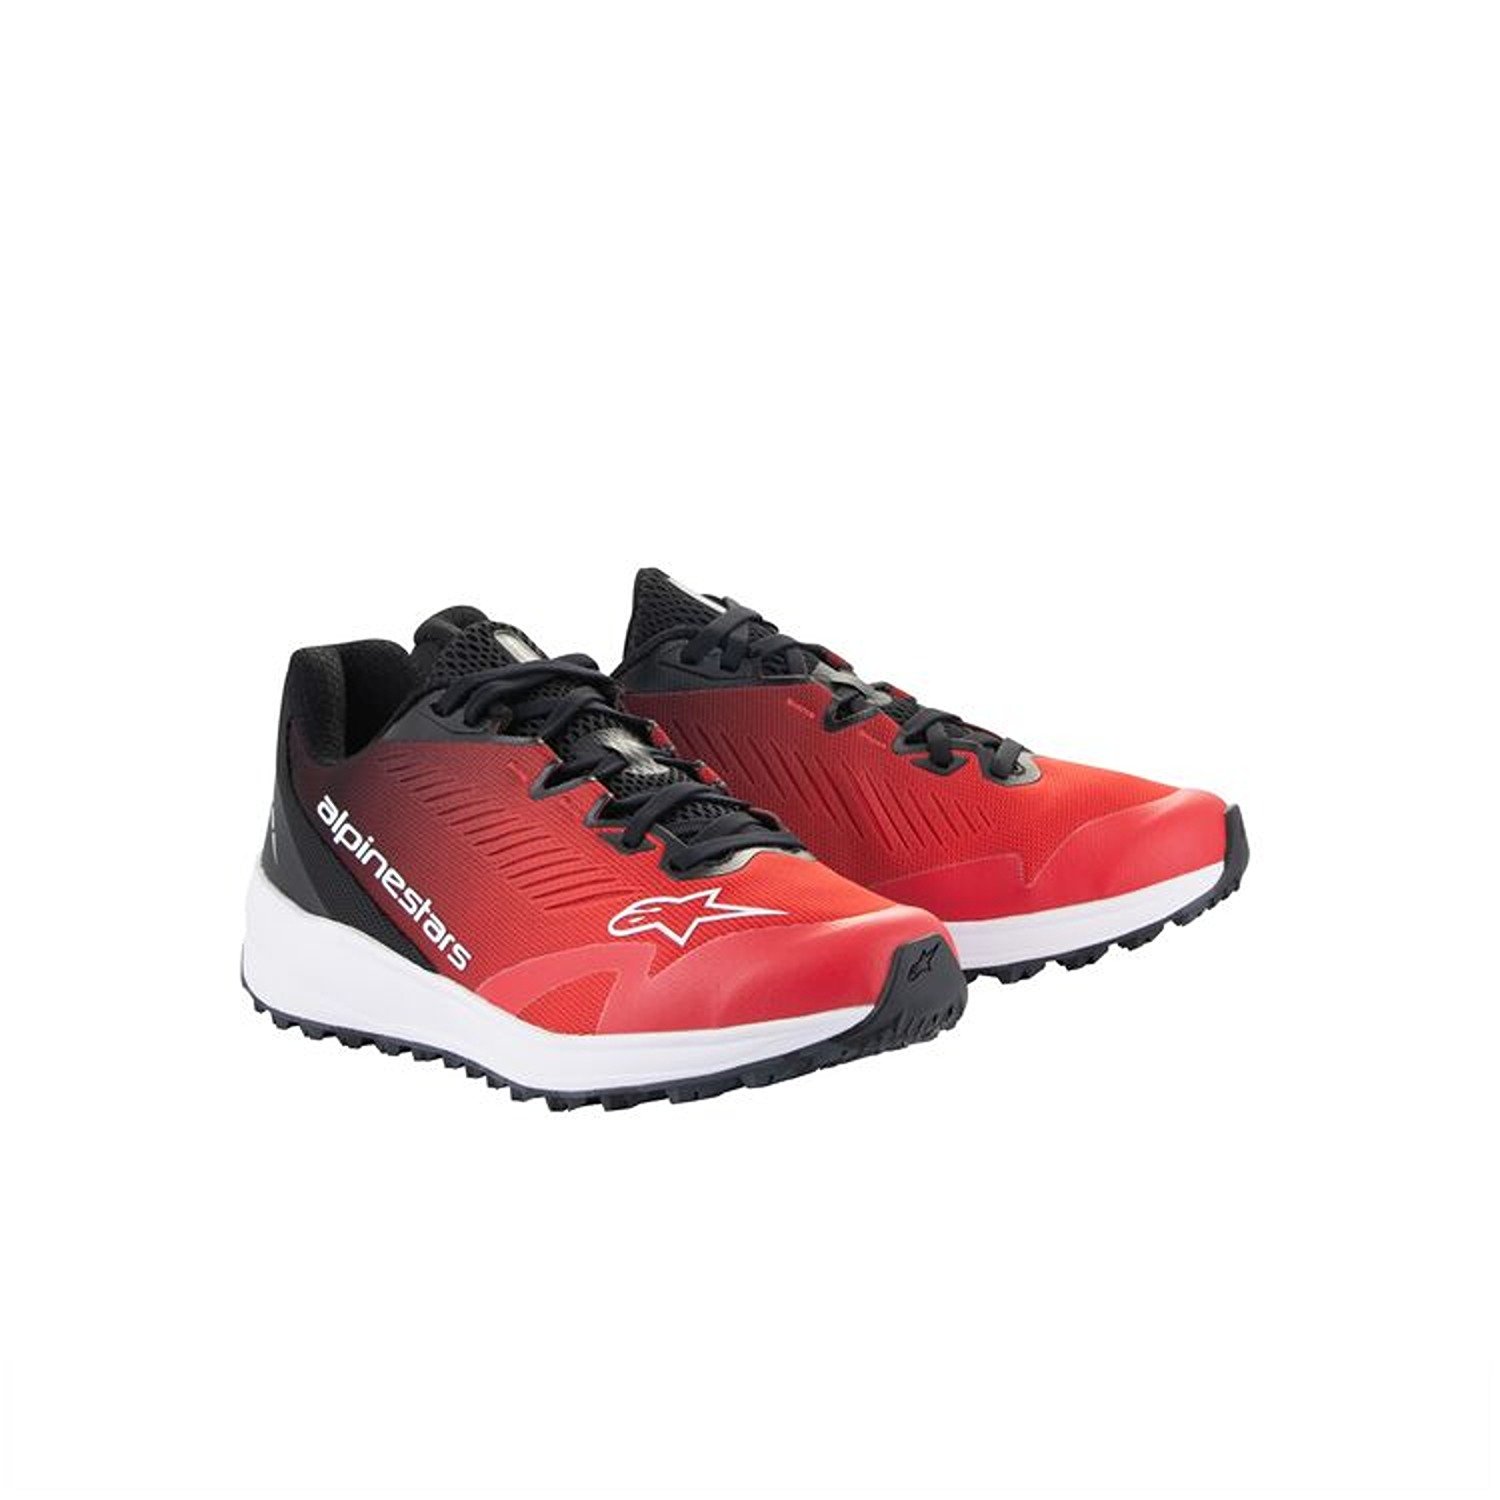 Image of Alpinestars Meta Road V2 Shoes Red Black White Size US 115 ID 8059347353616